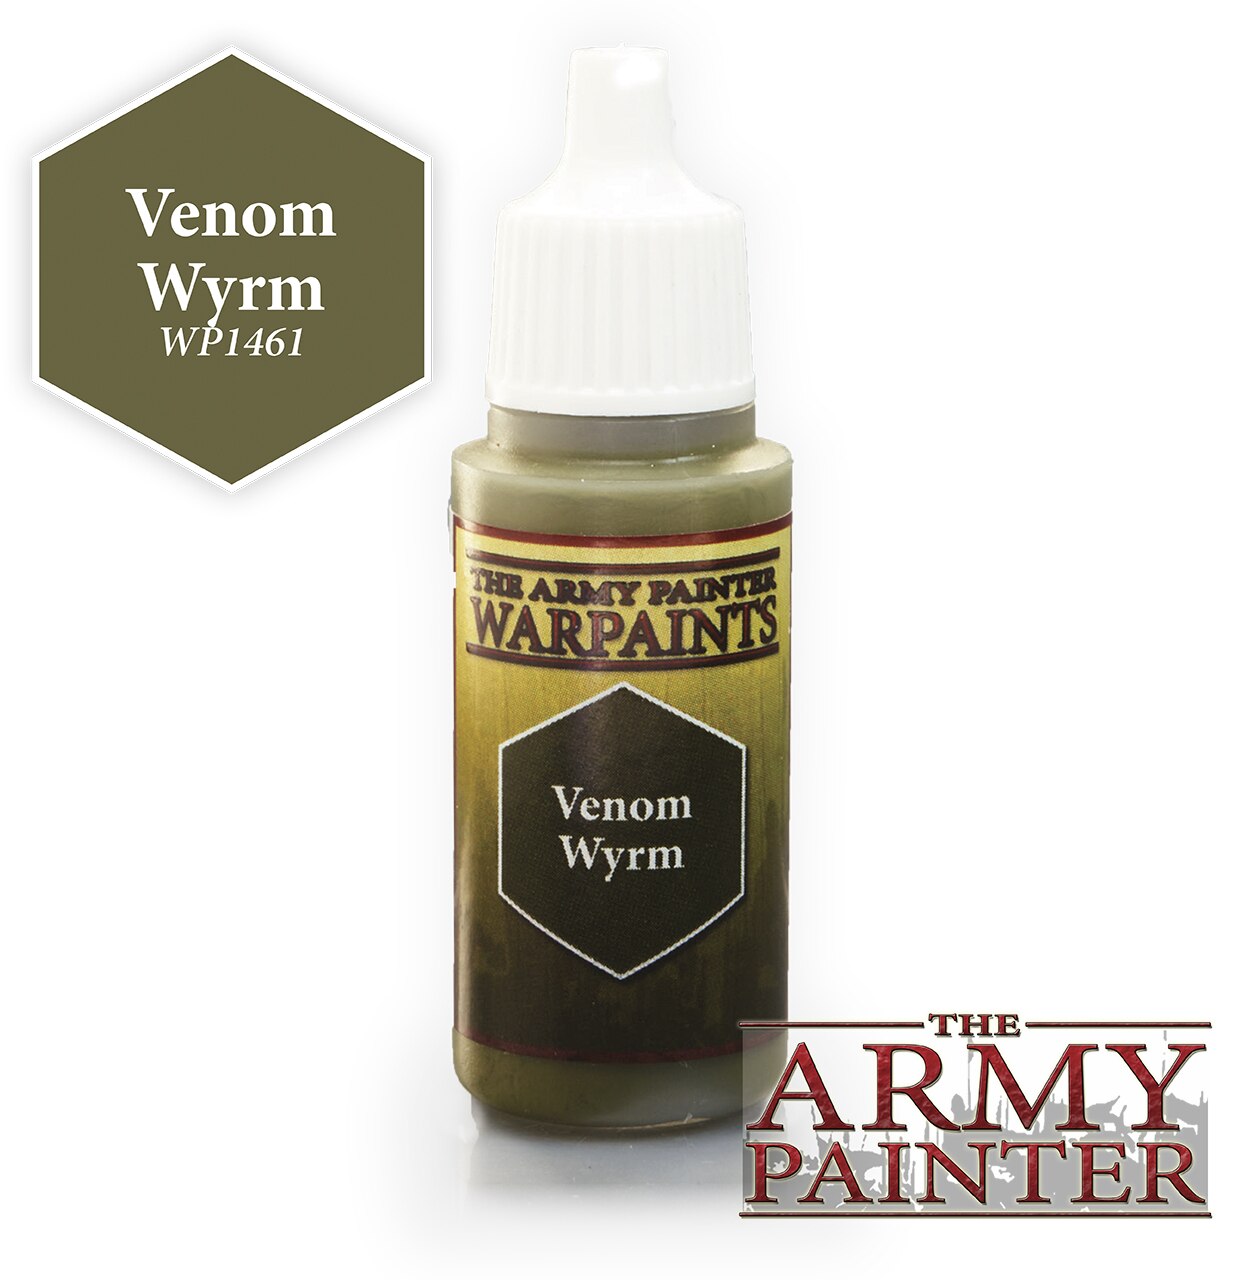 Army Painter Warpaint - Venom Wyrm